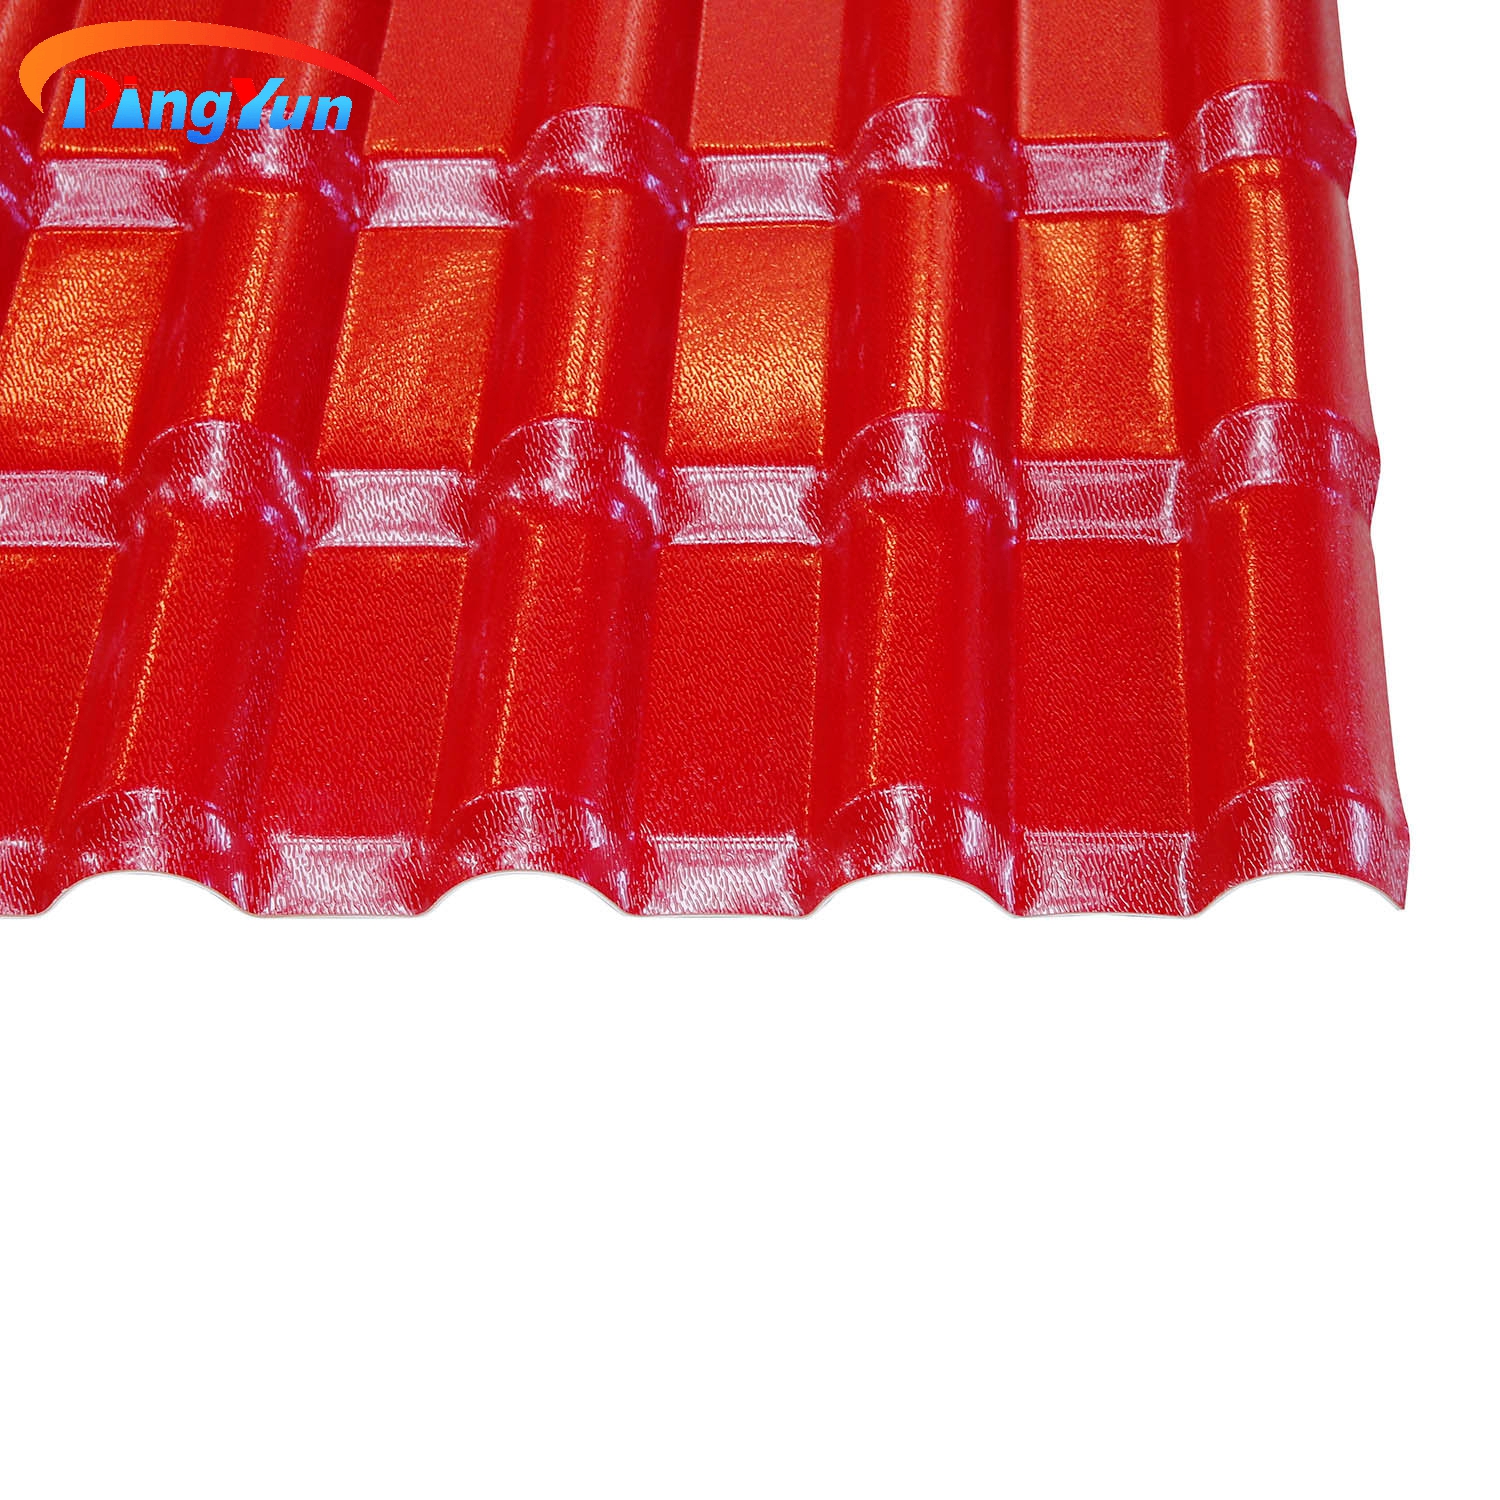 Villa Brick red Color stable PVC Roof Tile